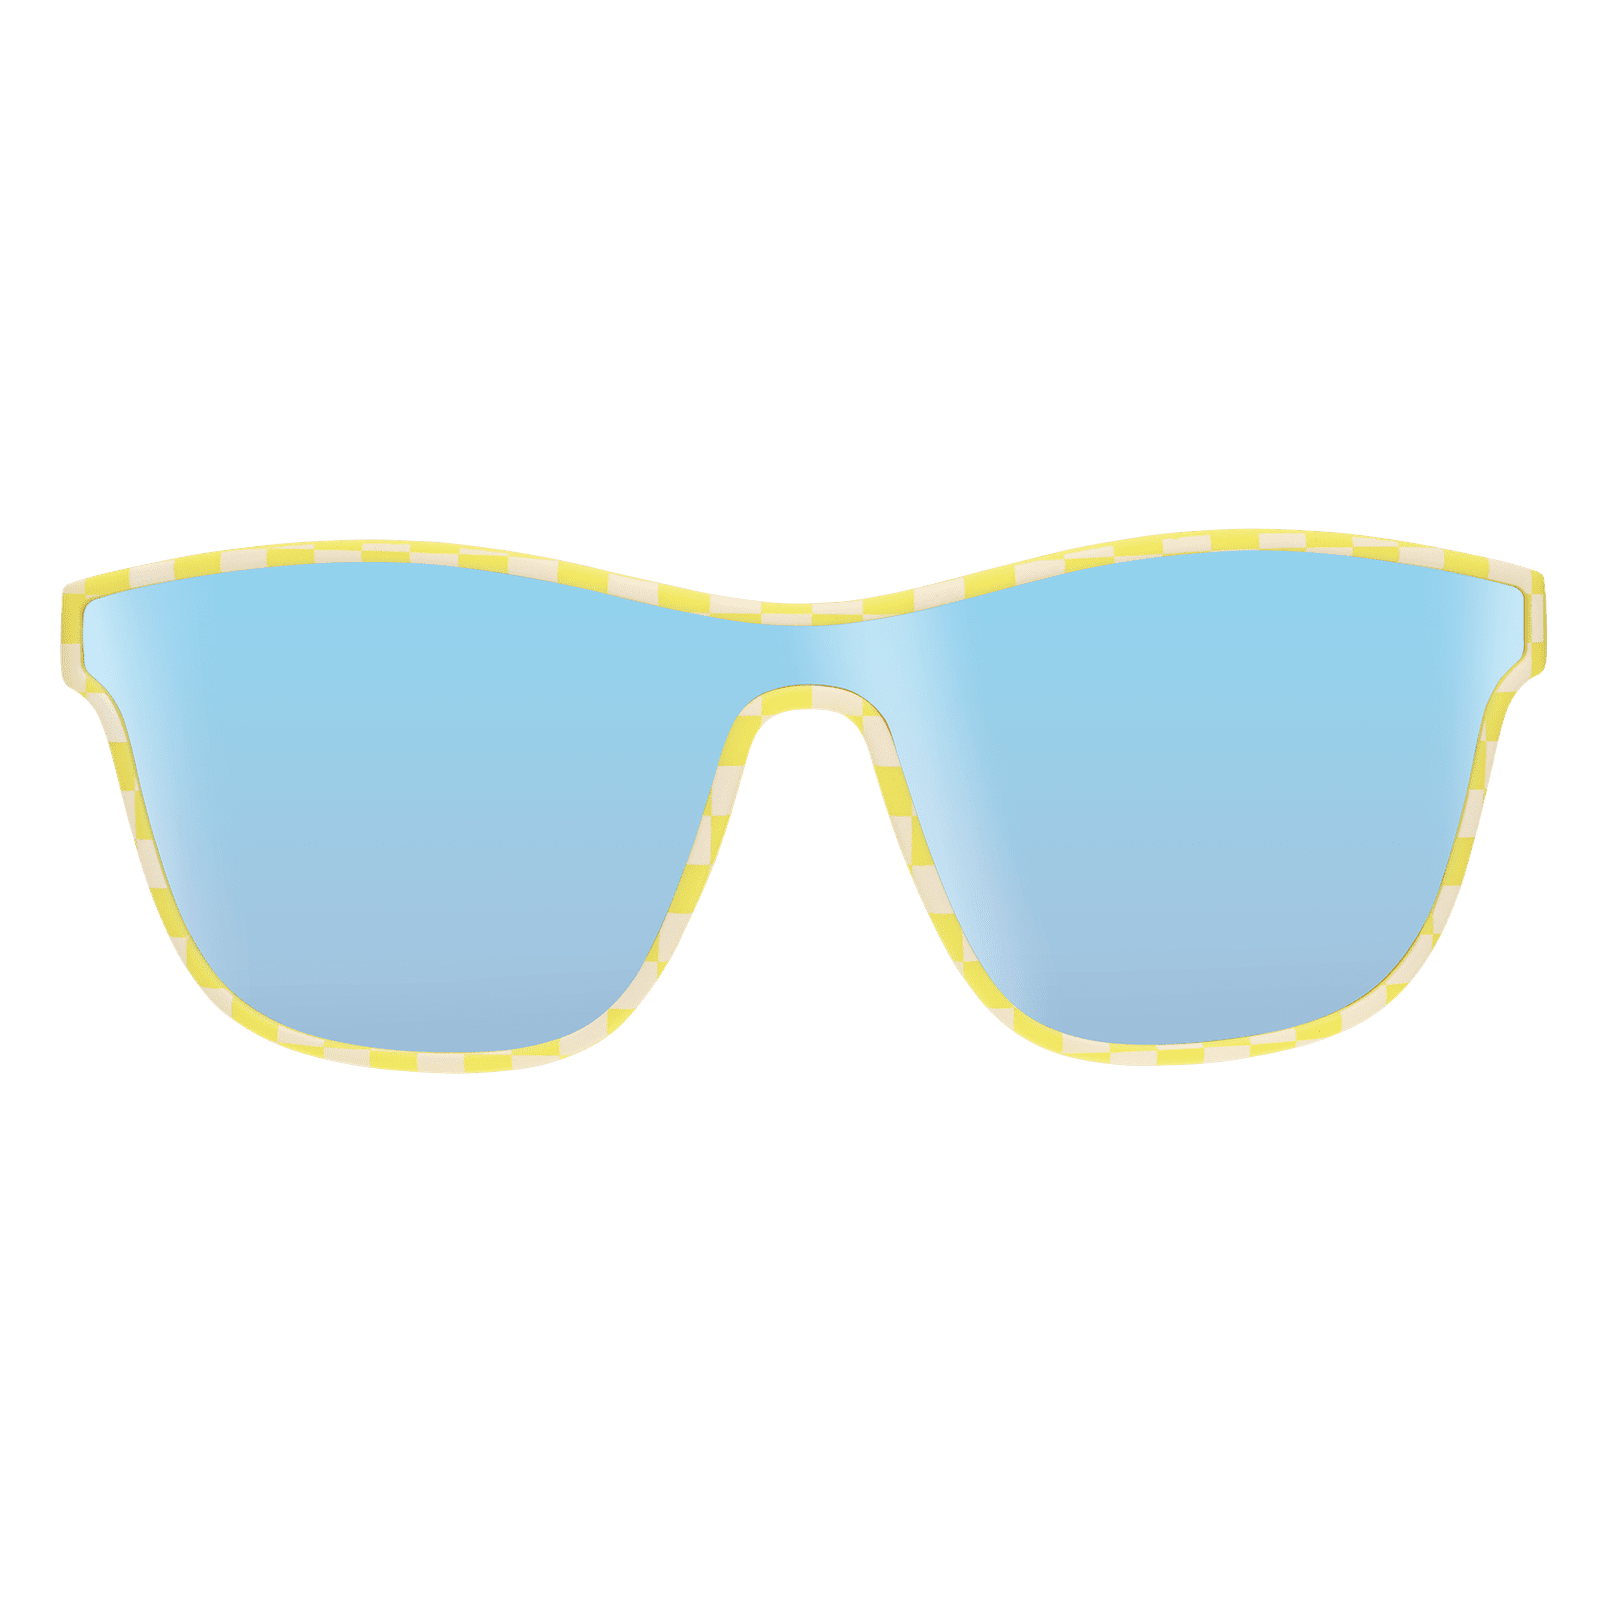 "Warn To Be Wild" VRG Premium Polarized Sunglasses Goodr